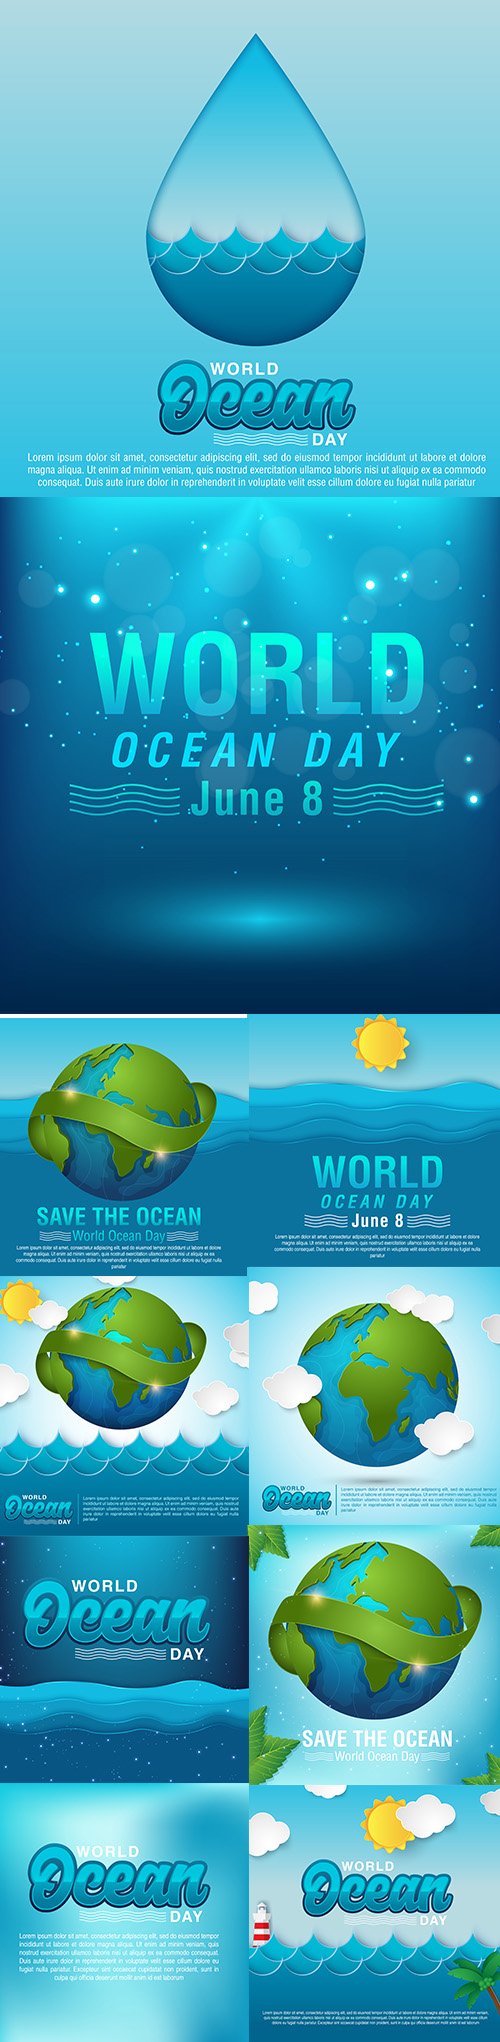 World Oceans Day Vector Illustrations